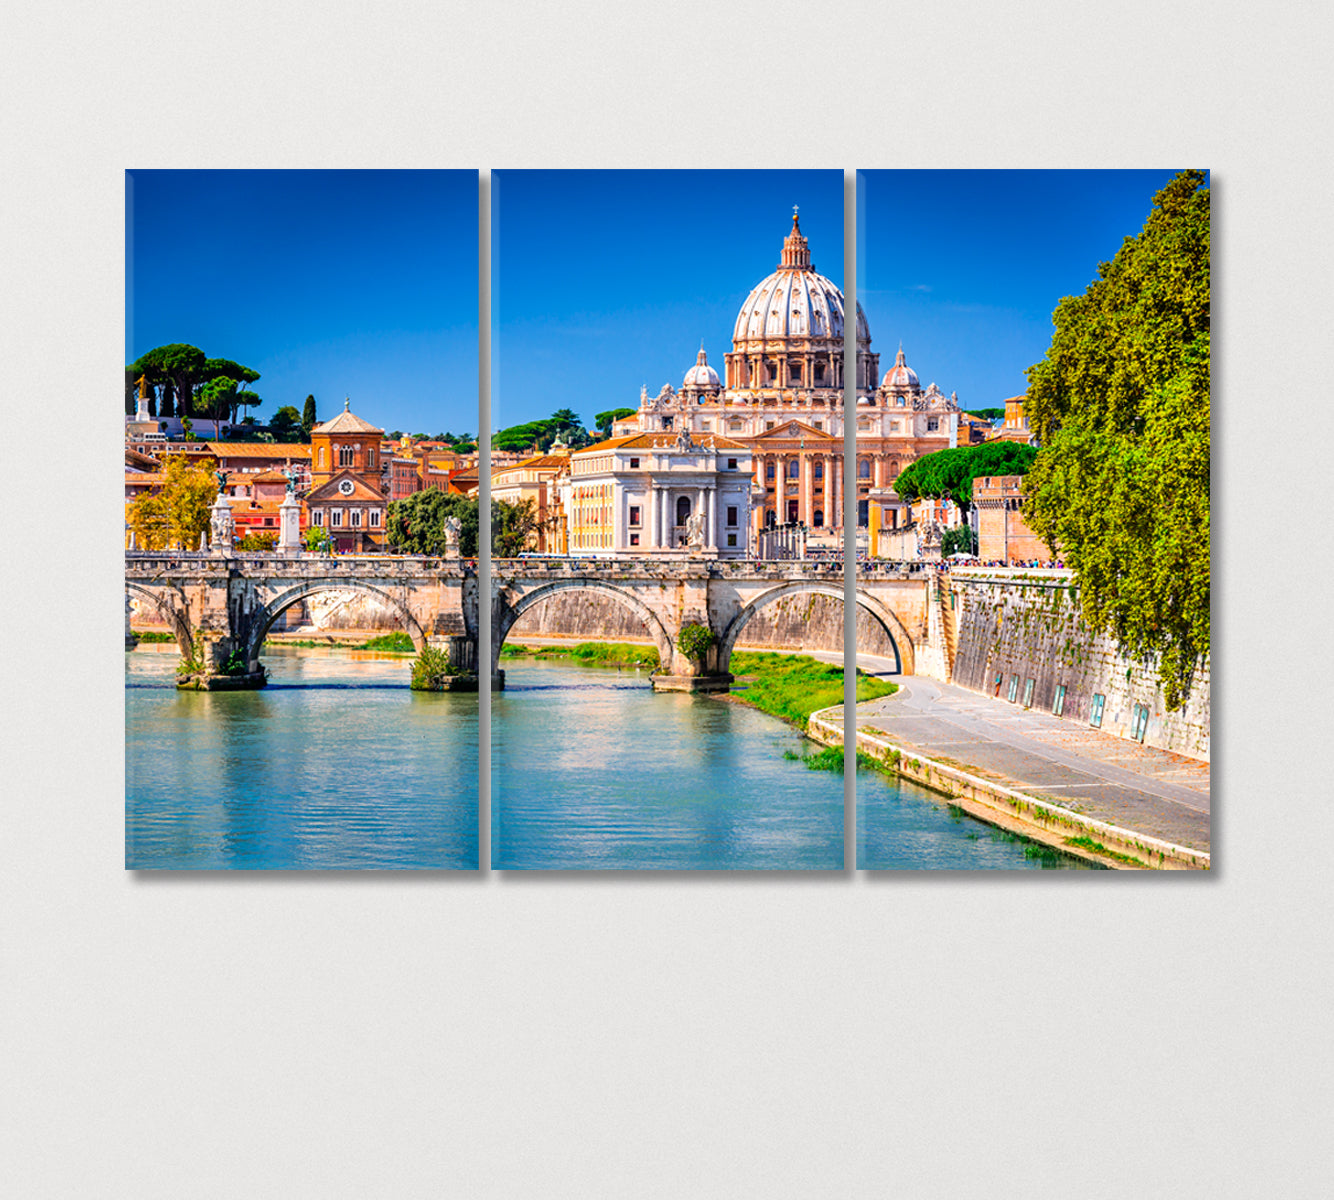 Sant Angelo Bridge and St Peter's Basilica Rome Italy Canvas Print-Canvas Print-CetArt-3 Panels-36x24 inches-CetArt